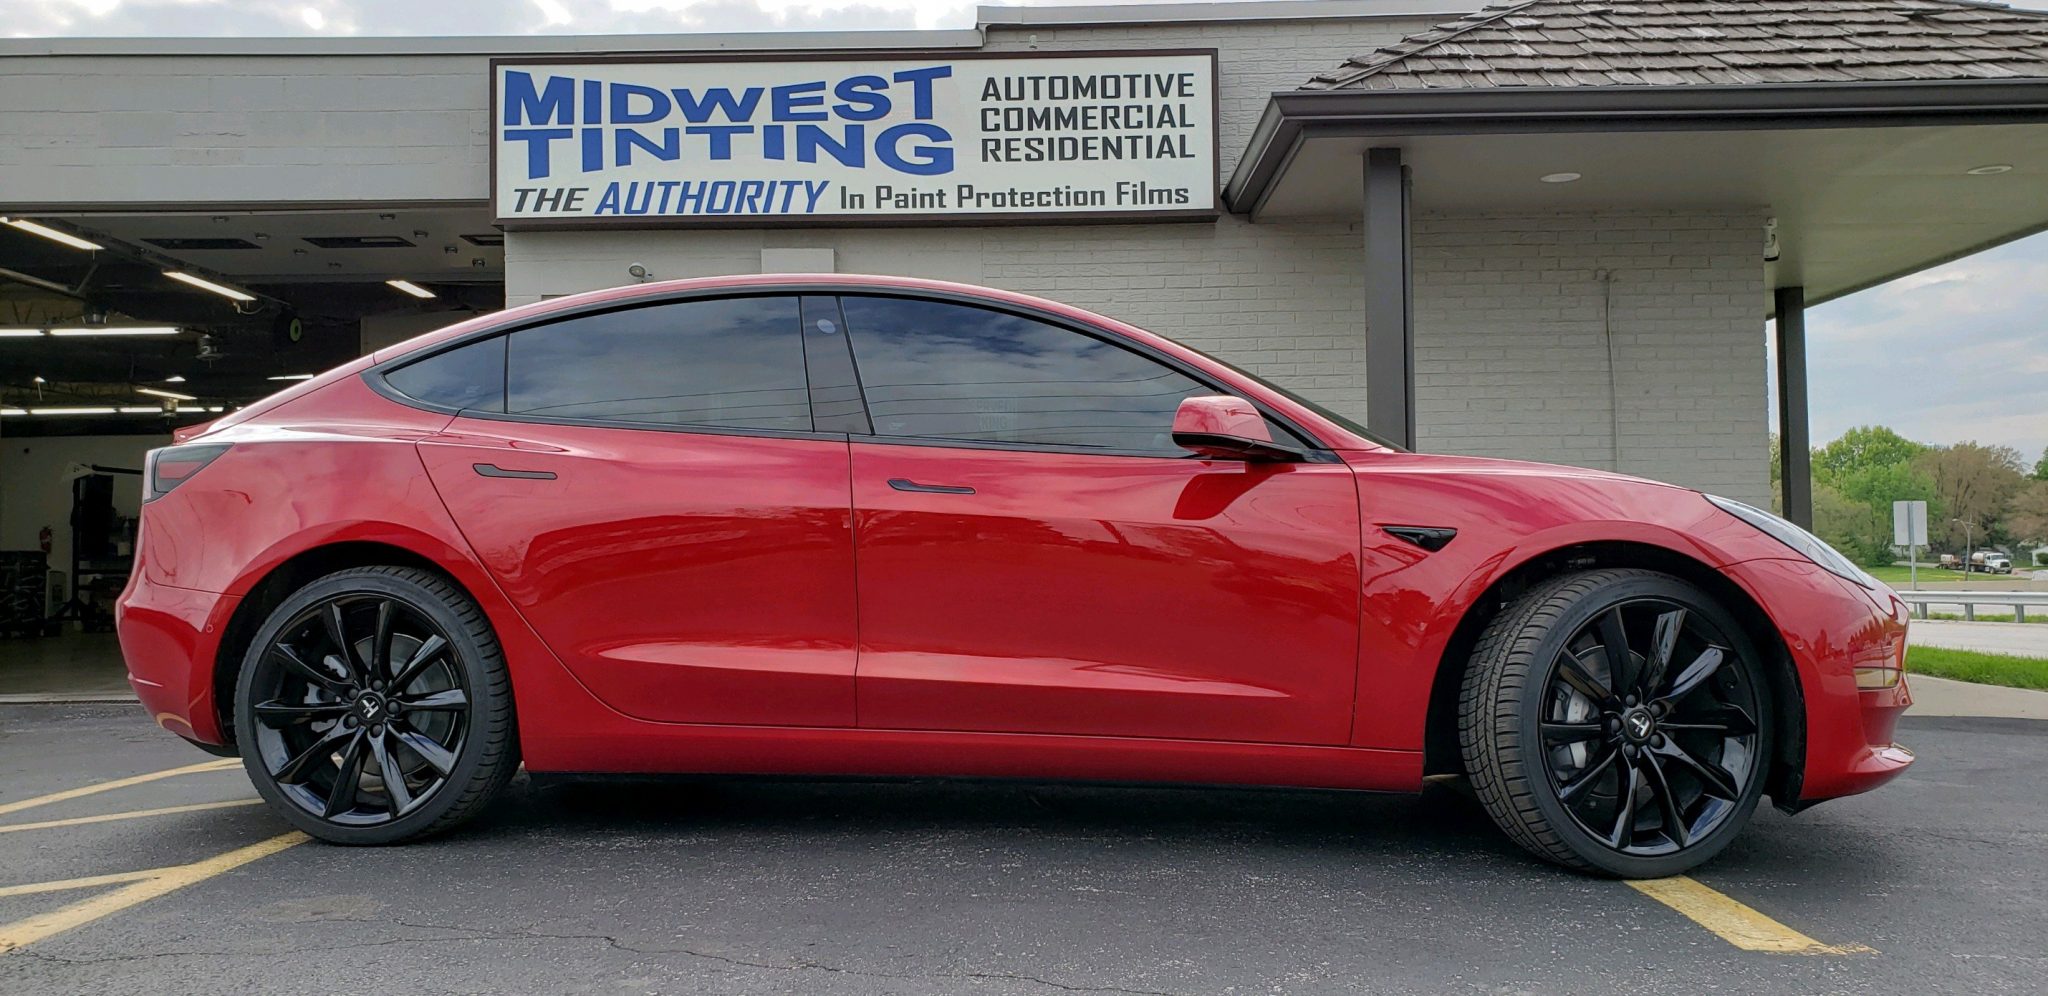 Automotive Window Tint Categories And Their Benefits - Car Window Tinting in Kansas City, Kansas